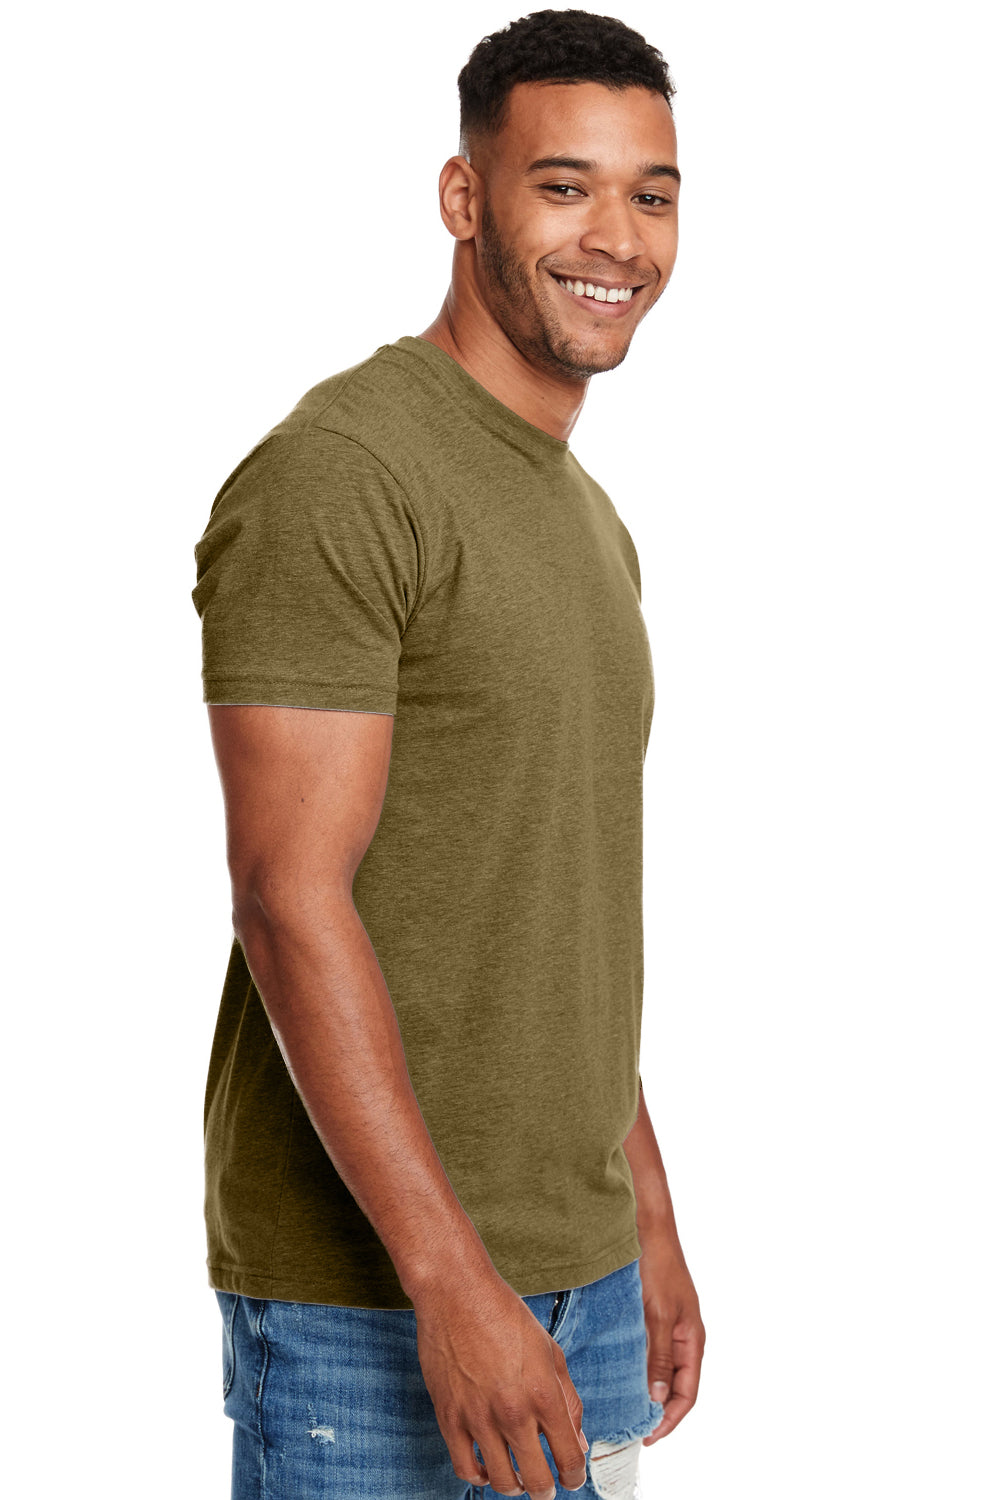 Next Level N6210 Mens CVC Jersey Short Sleeve Crewneck T-Shirt Military Green Side